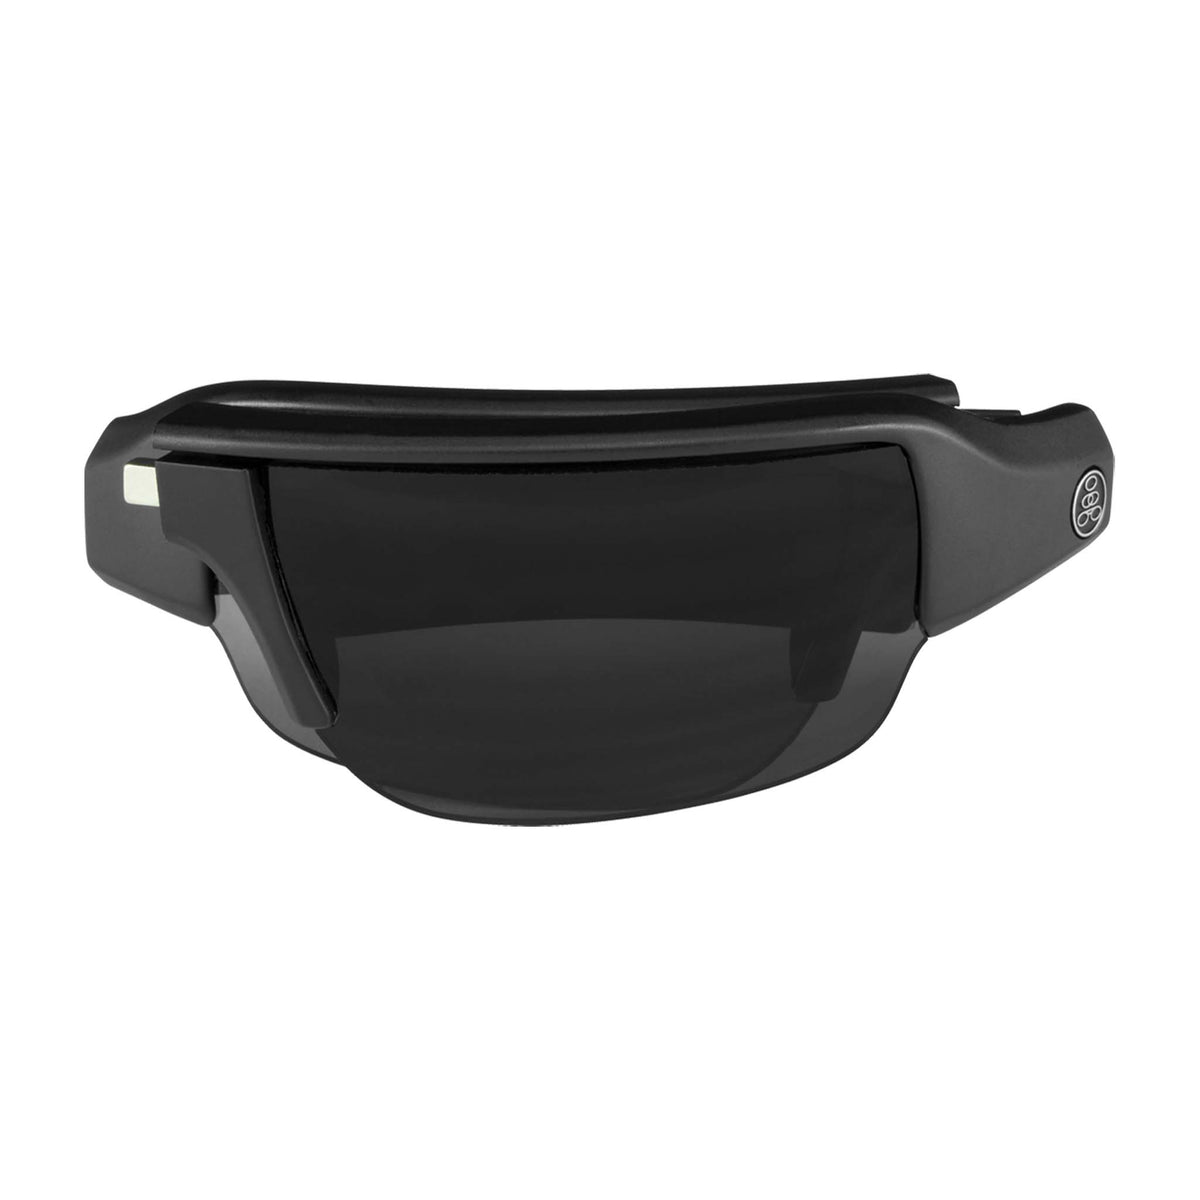 Popticals, Premium Compact Sunglasses, PopGun, 030010-LFGP, Polarized Sunglasses, Gloss Wine/Black Crystal Frame, Gray Lenses, Compact View